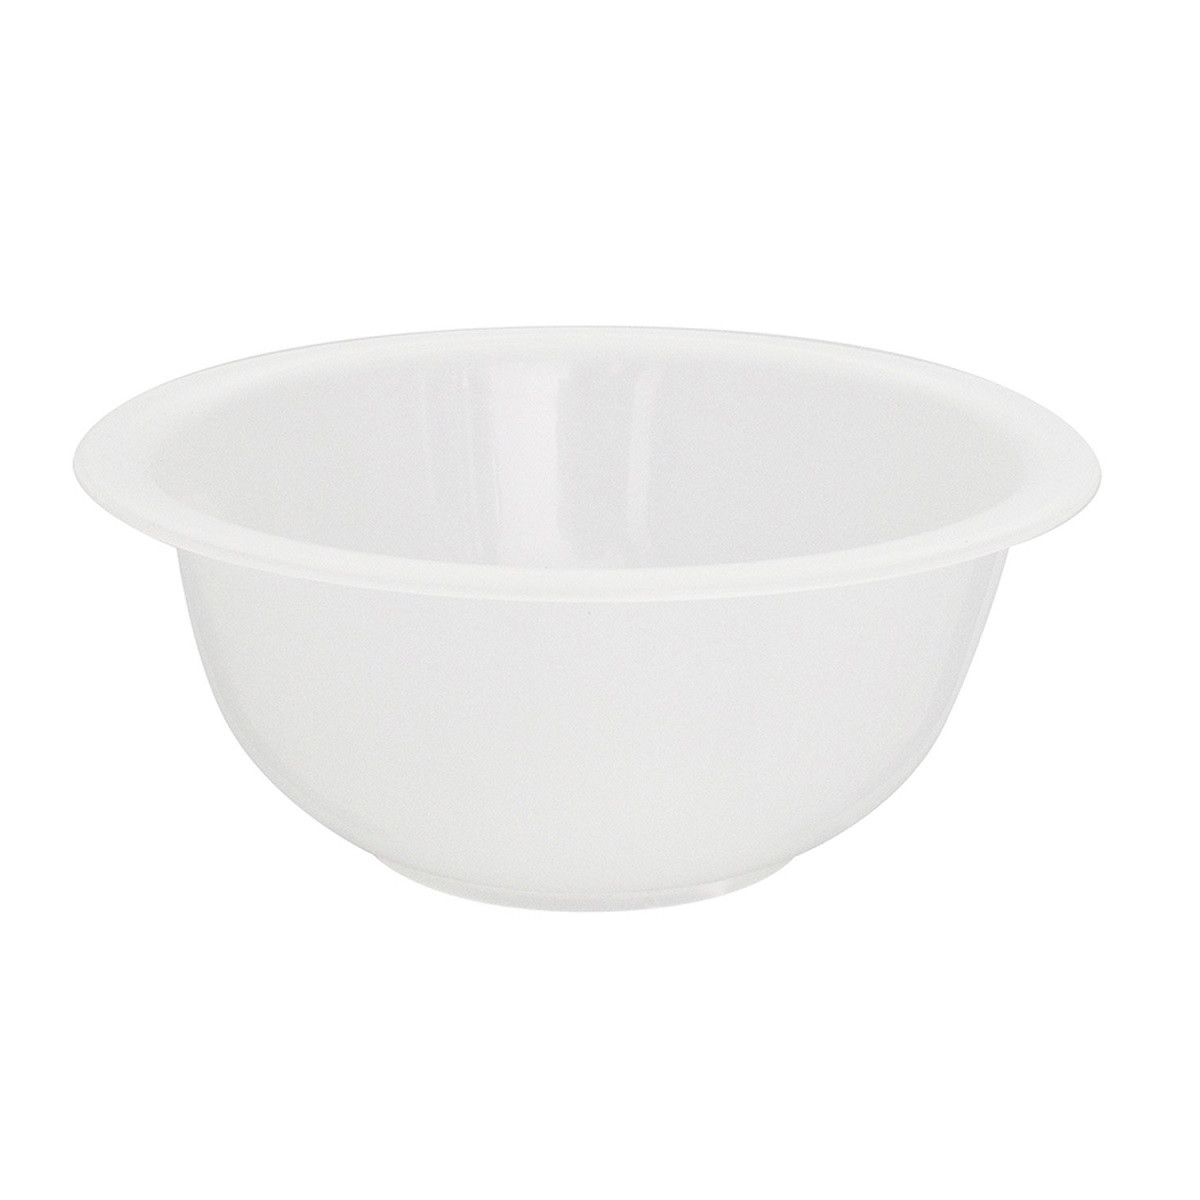 Frying bowl plastic, 40 cm.